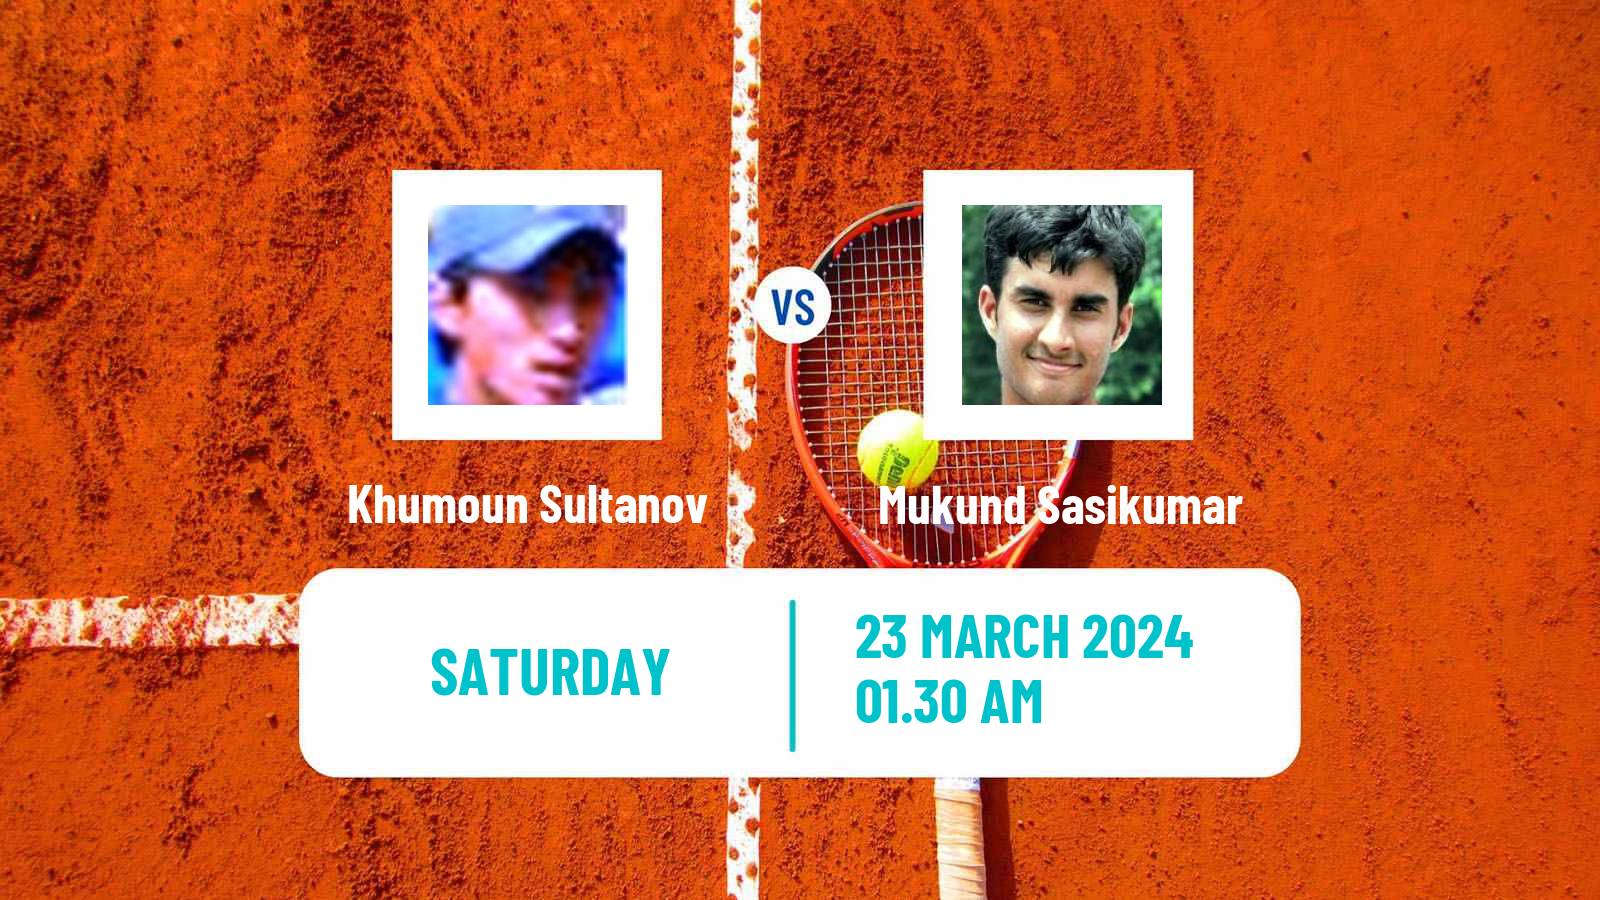 Tennis ITF M15 Chandigarh Men Khumoun Sultanov - Mukund Sasikumar